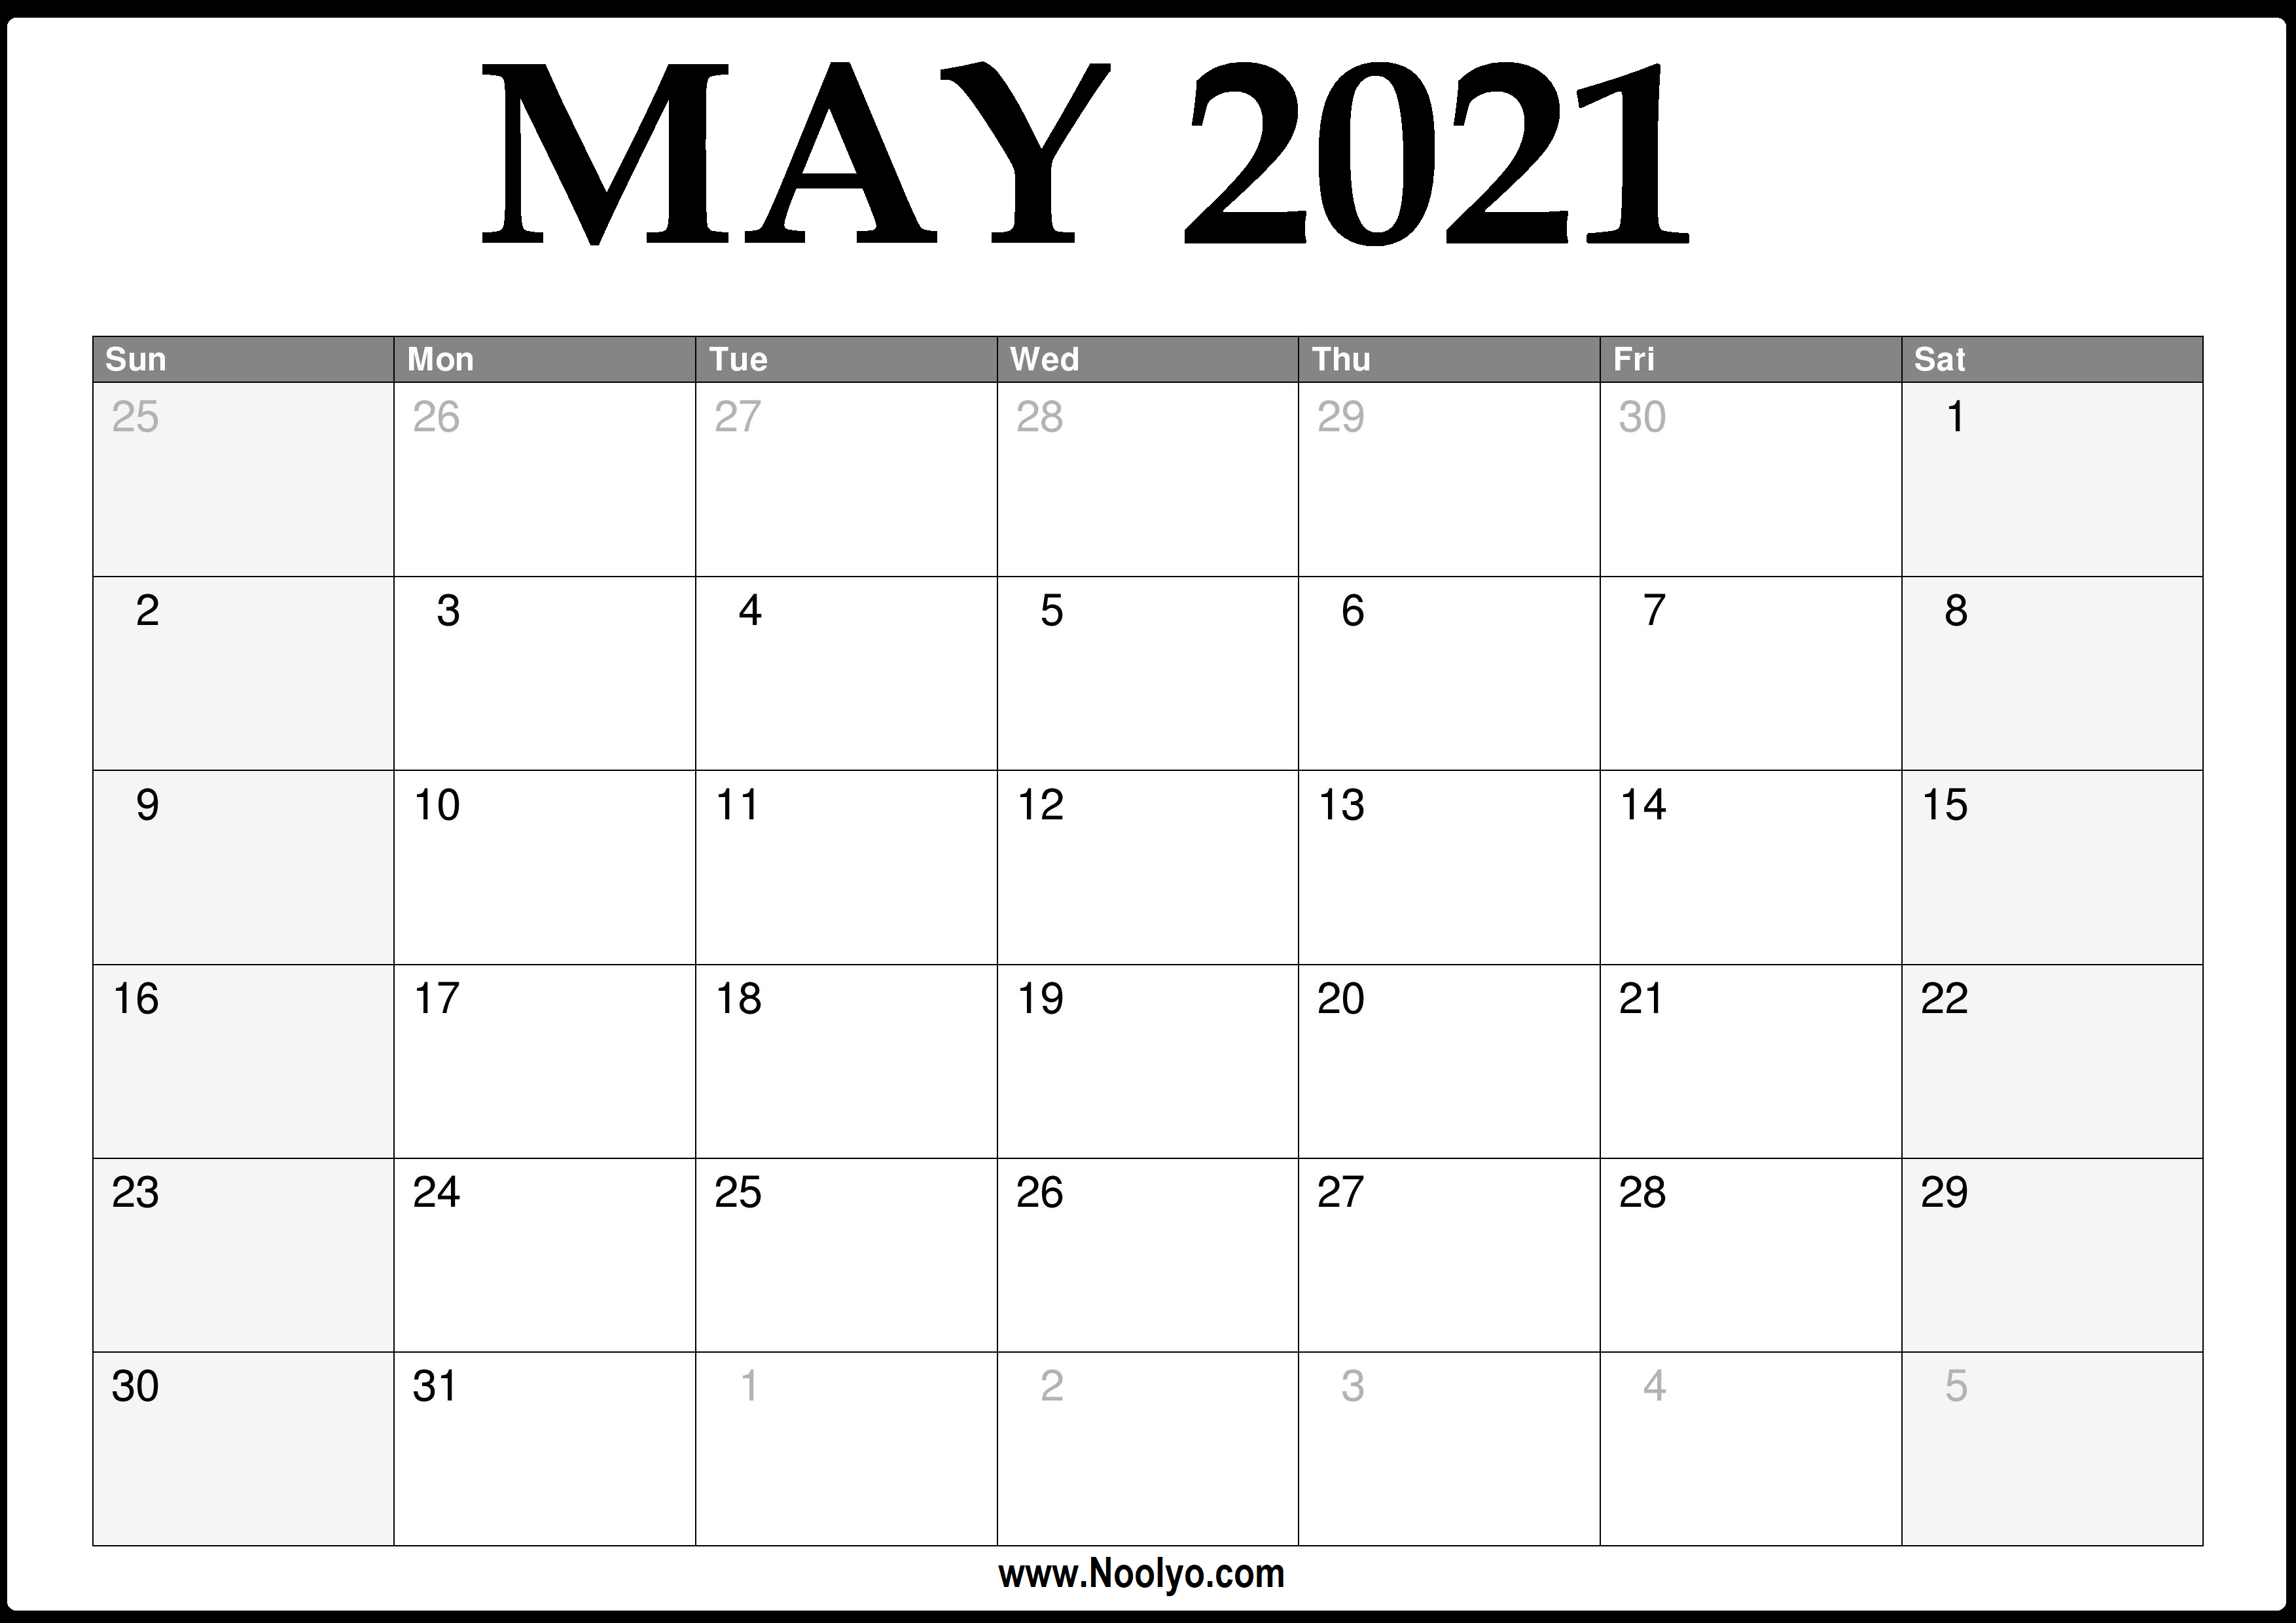 2021 may calendar 2021 May Calendar Printable Download Free Noolyo Com 2021 may calendar